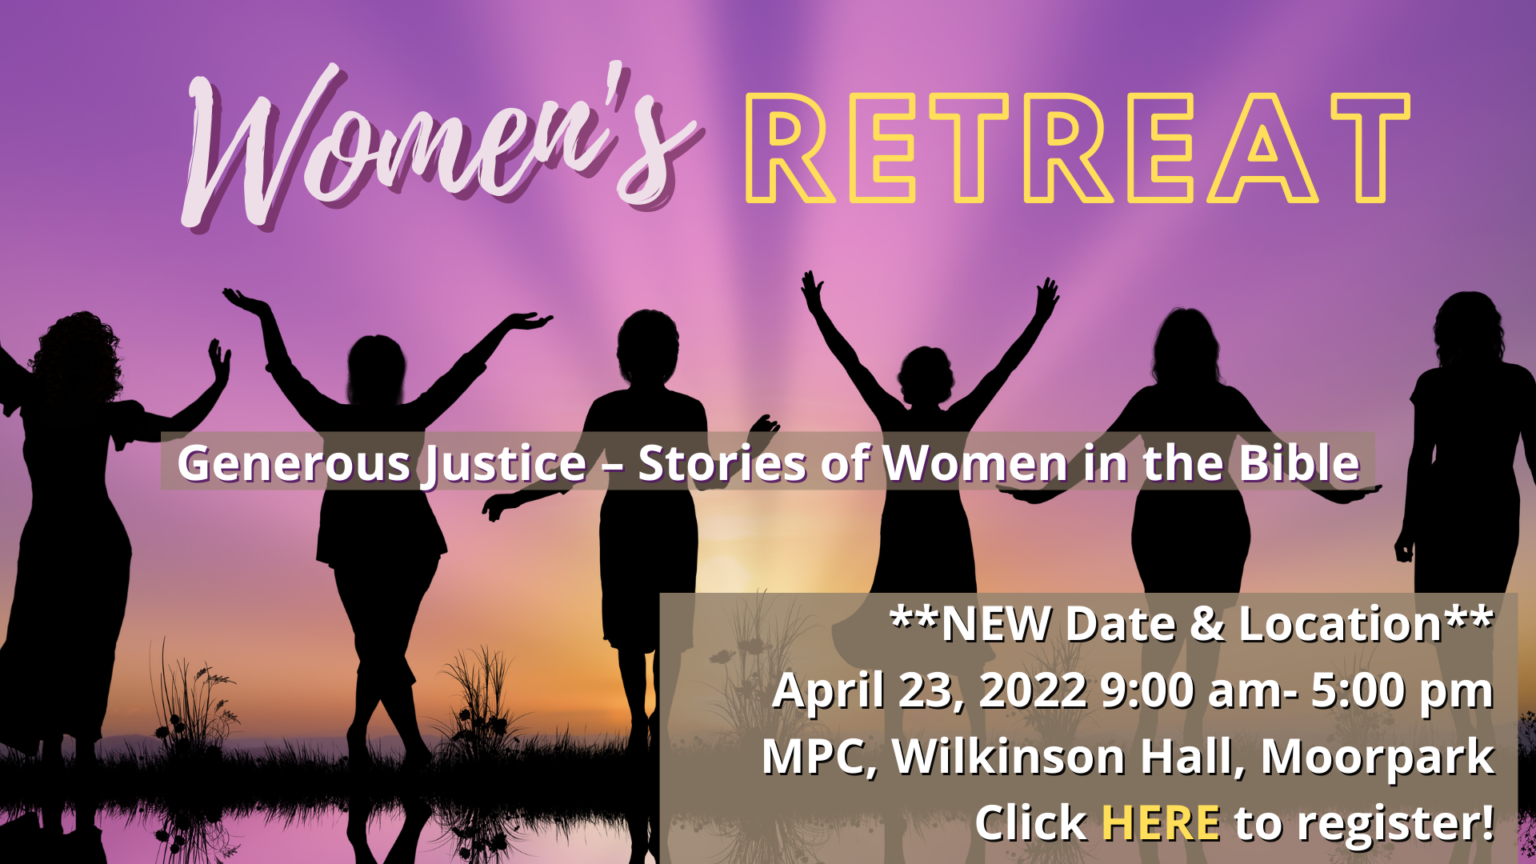 Women’s Retreat UPDATE! Moorpark Presbyterian Church